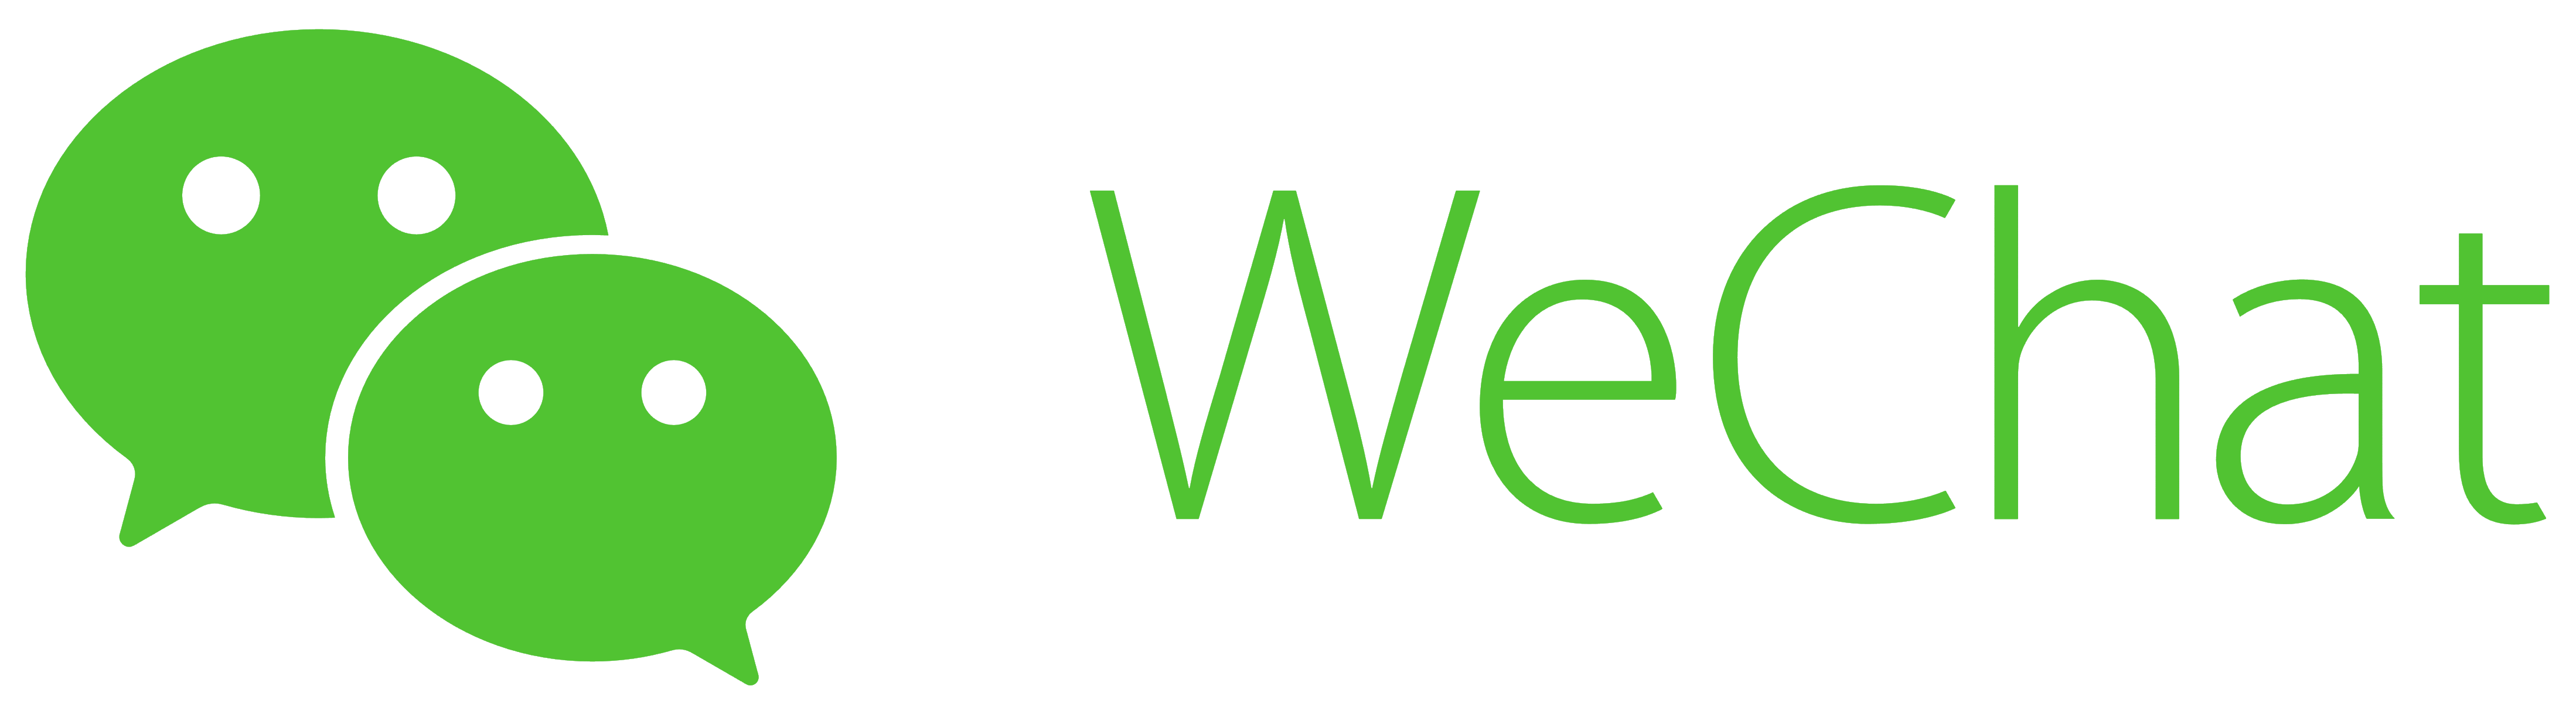 WeChat logo wordmark